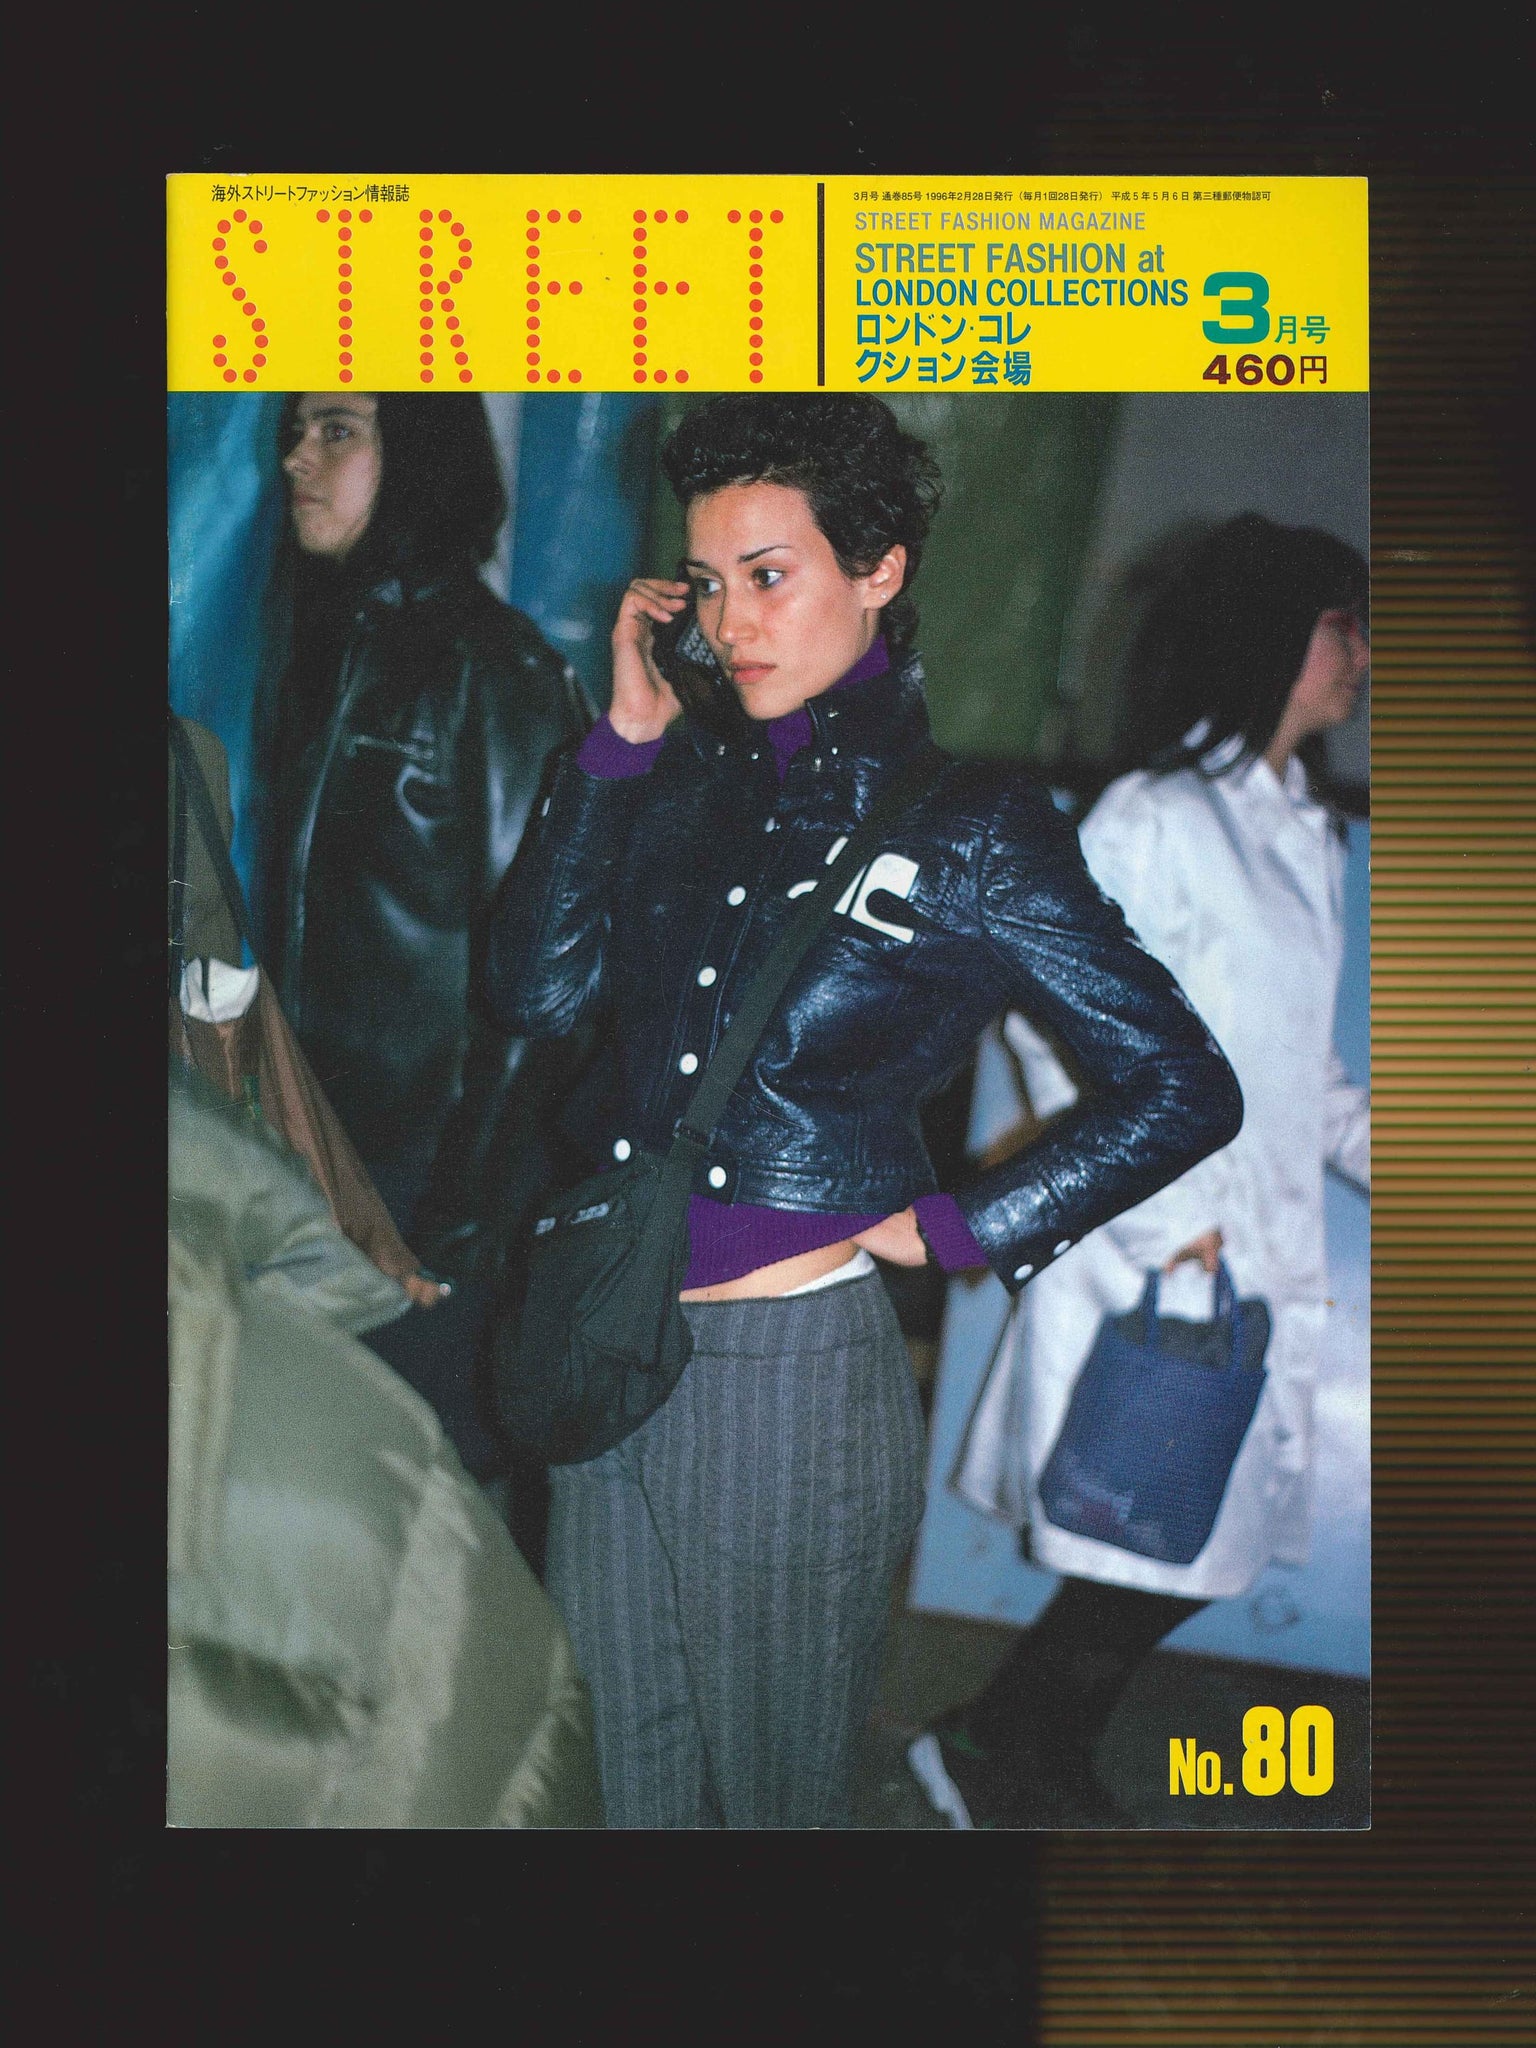 STREET magazine no. 80 / march 1996 / london collections / Shoichi Aoki